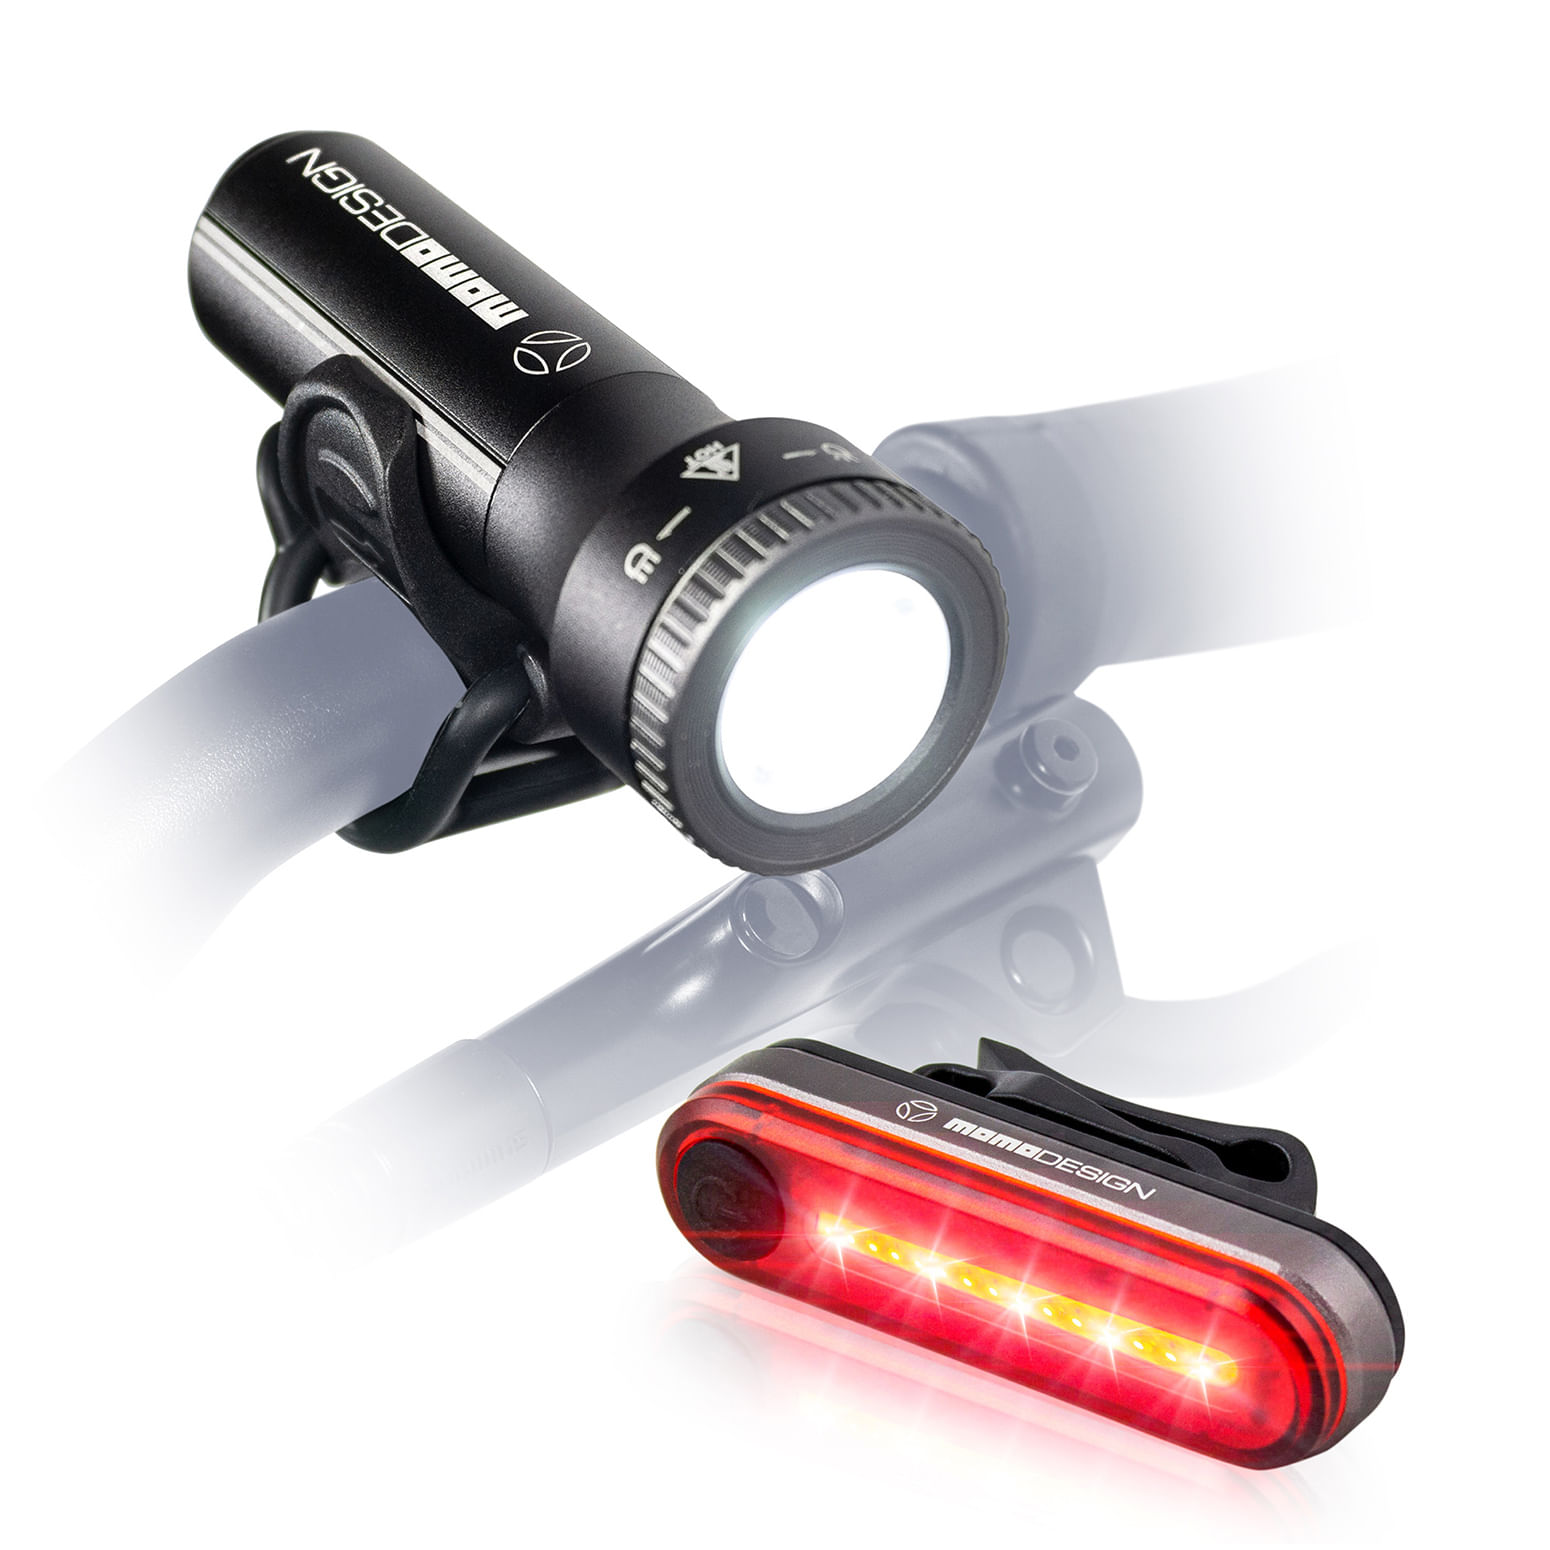 Pack Luz LED Delantera y Luz Trasera Recargable para Bicicleta - Promart